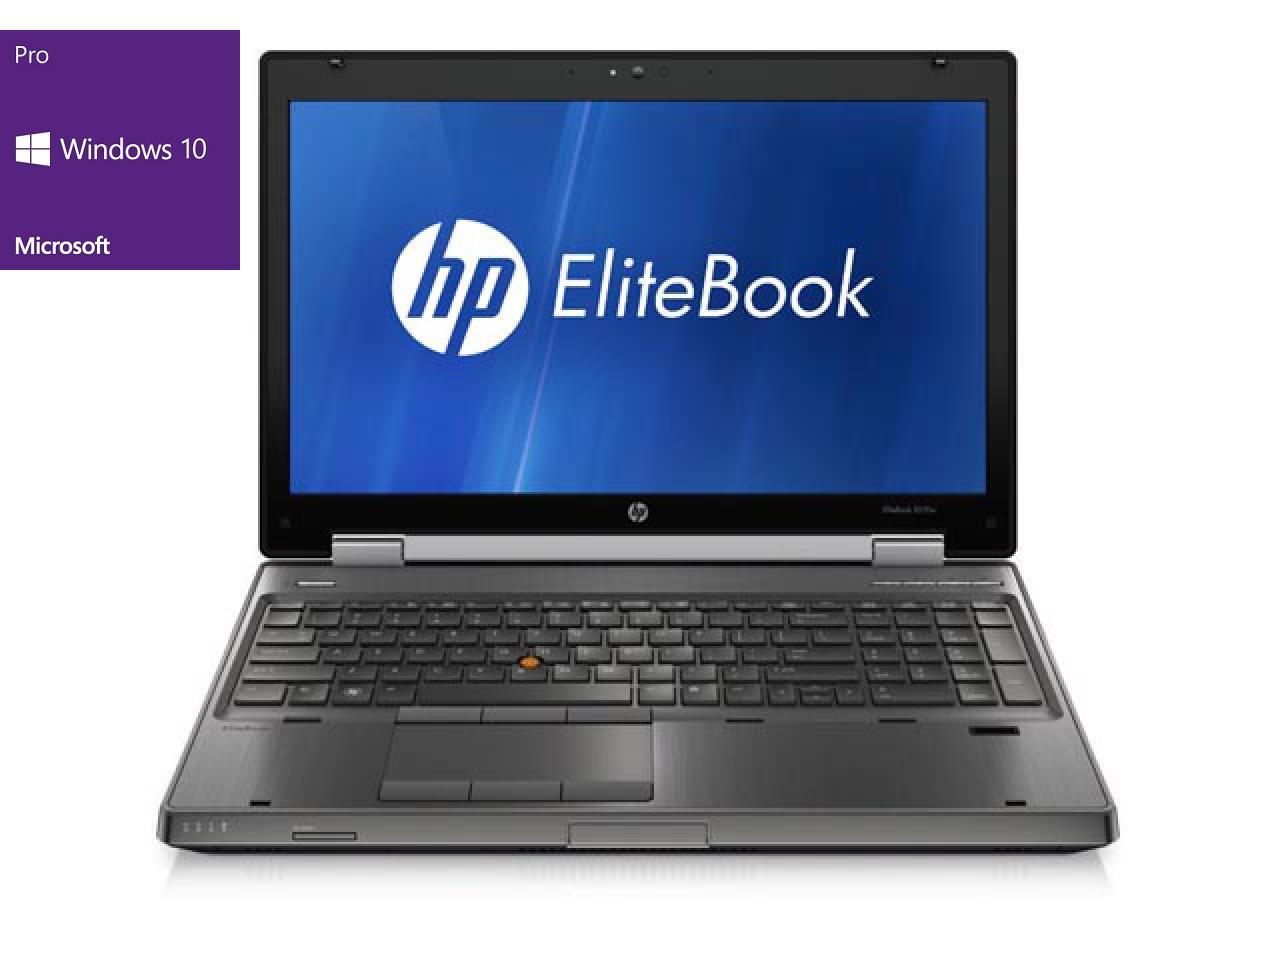 Hewlett Packard EliteBook 8570w